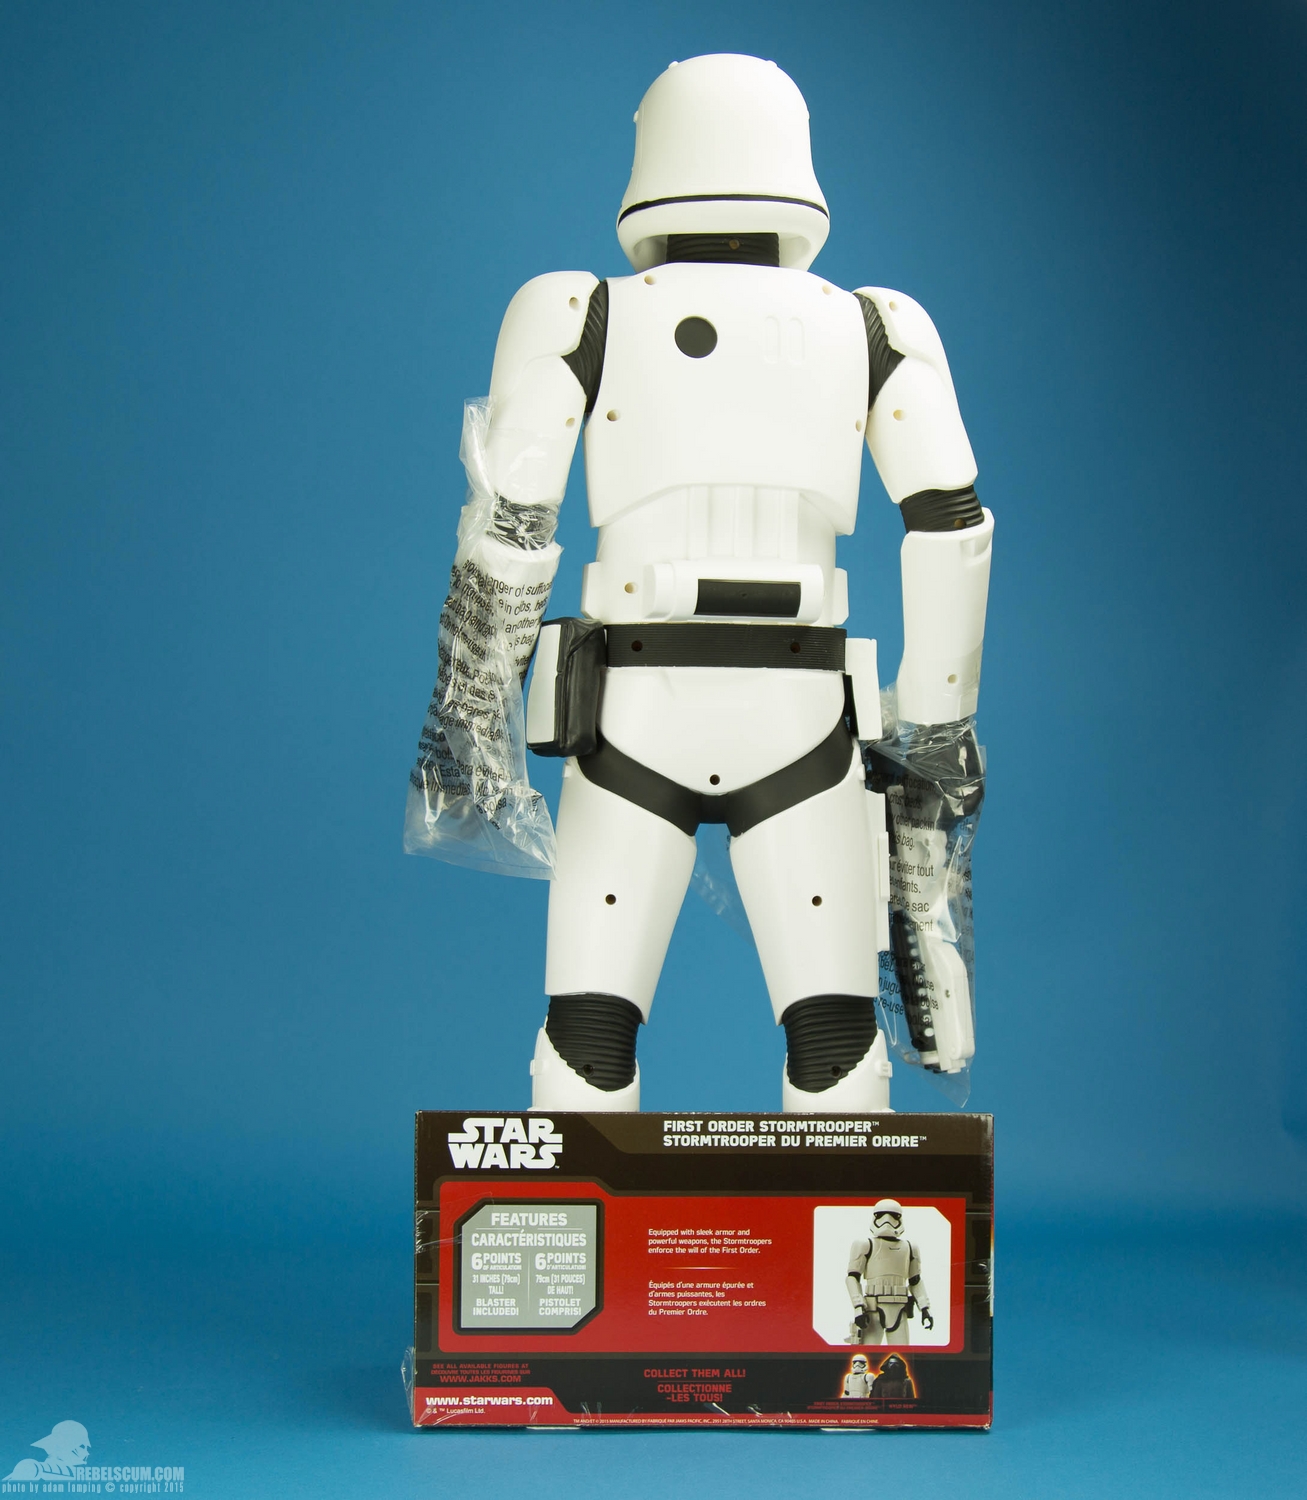 jakks-pacific-first-order-stormtrooper-31-inch-figure-015.jpg